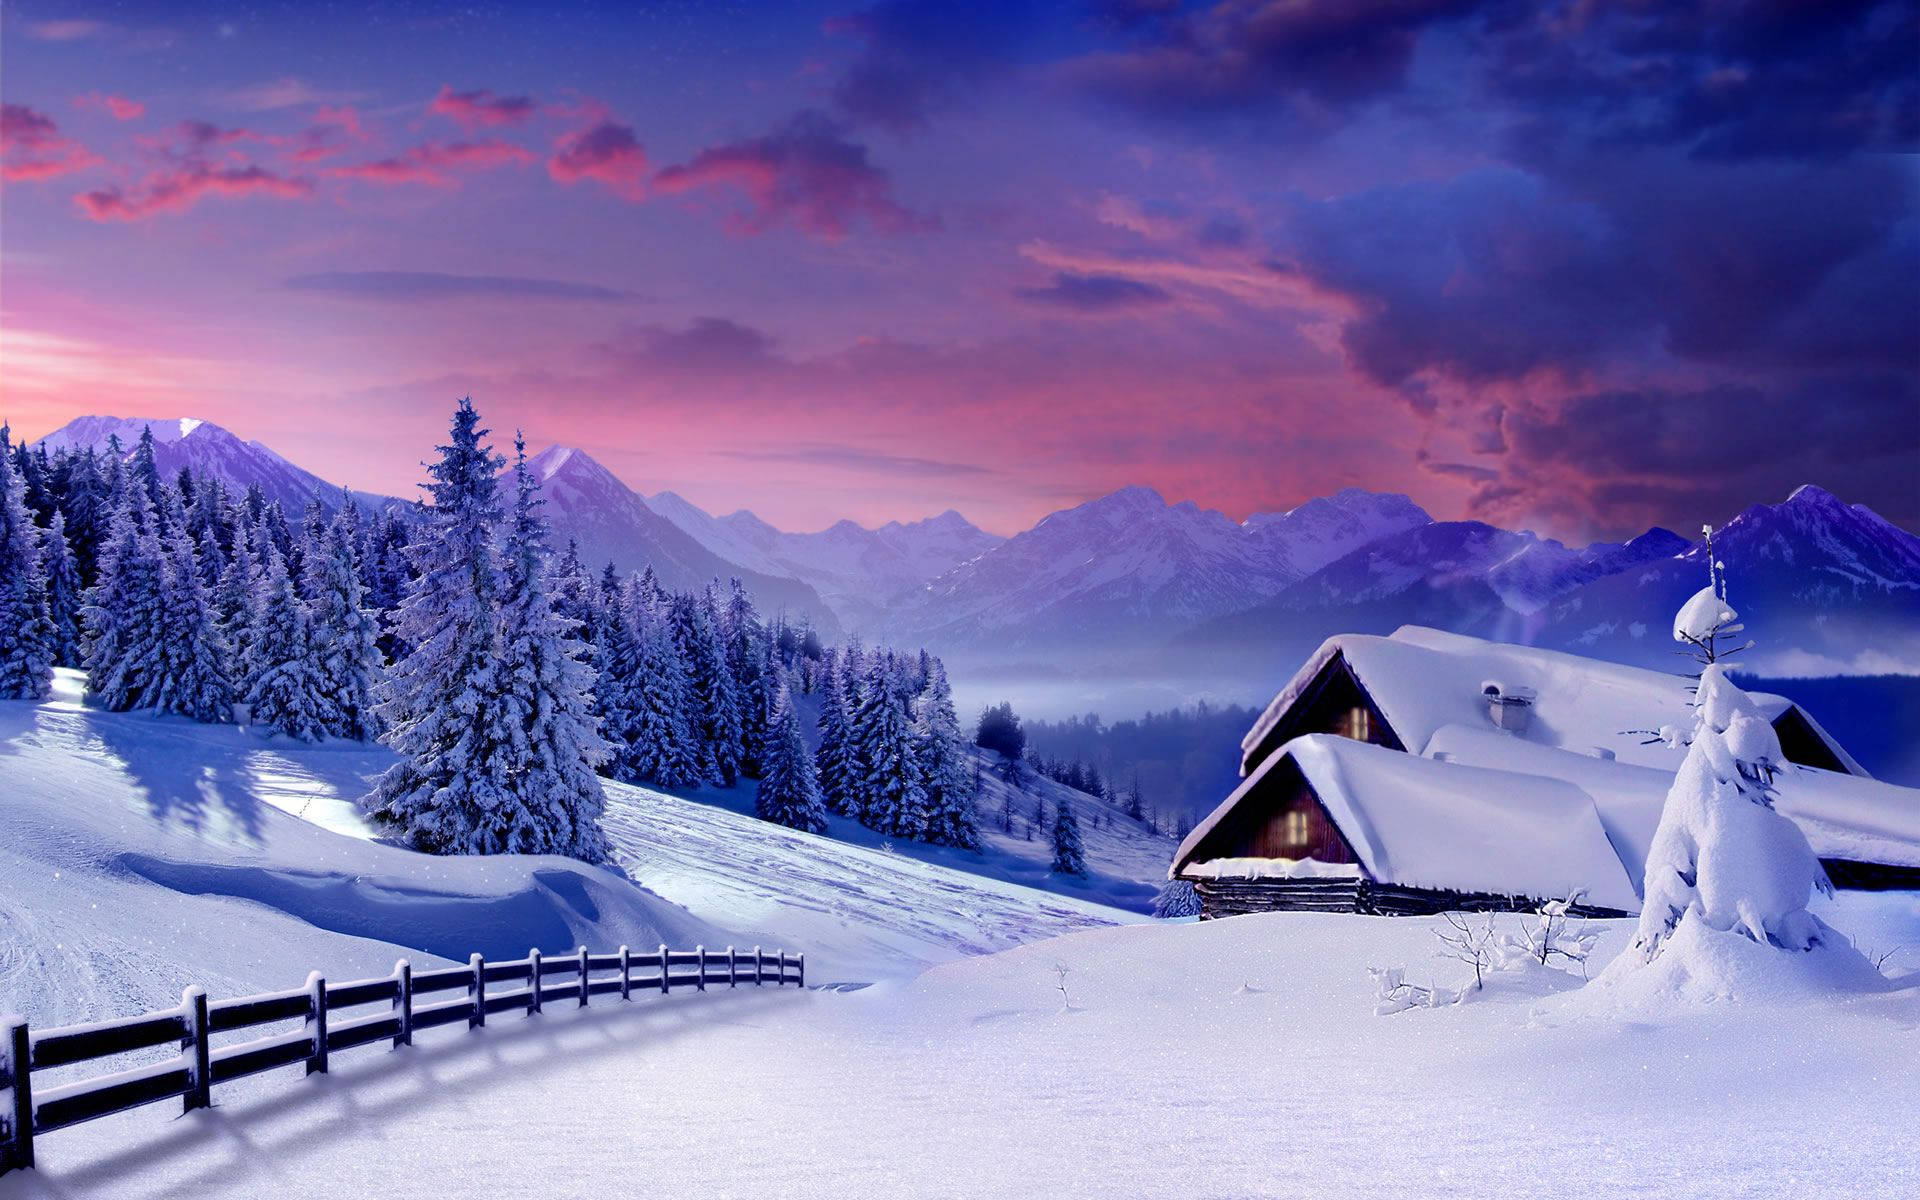 Snowy Cabin In Winter Background